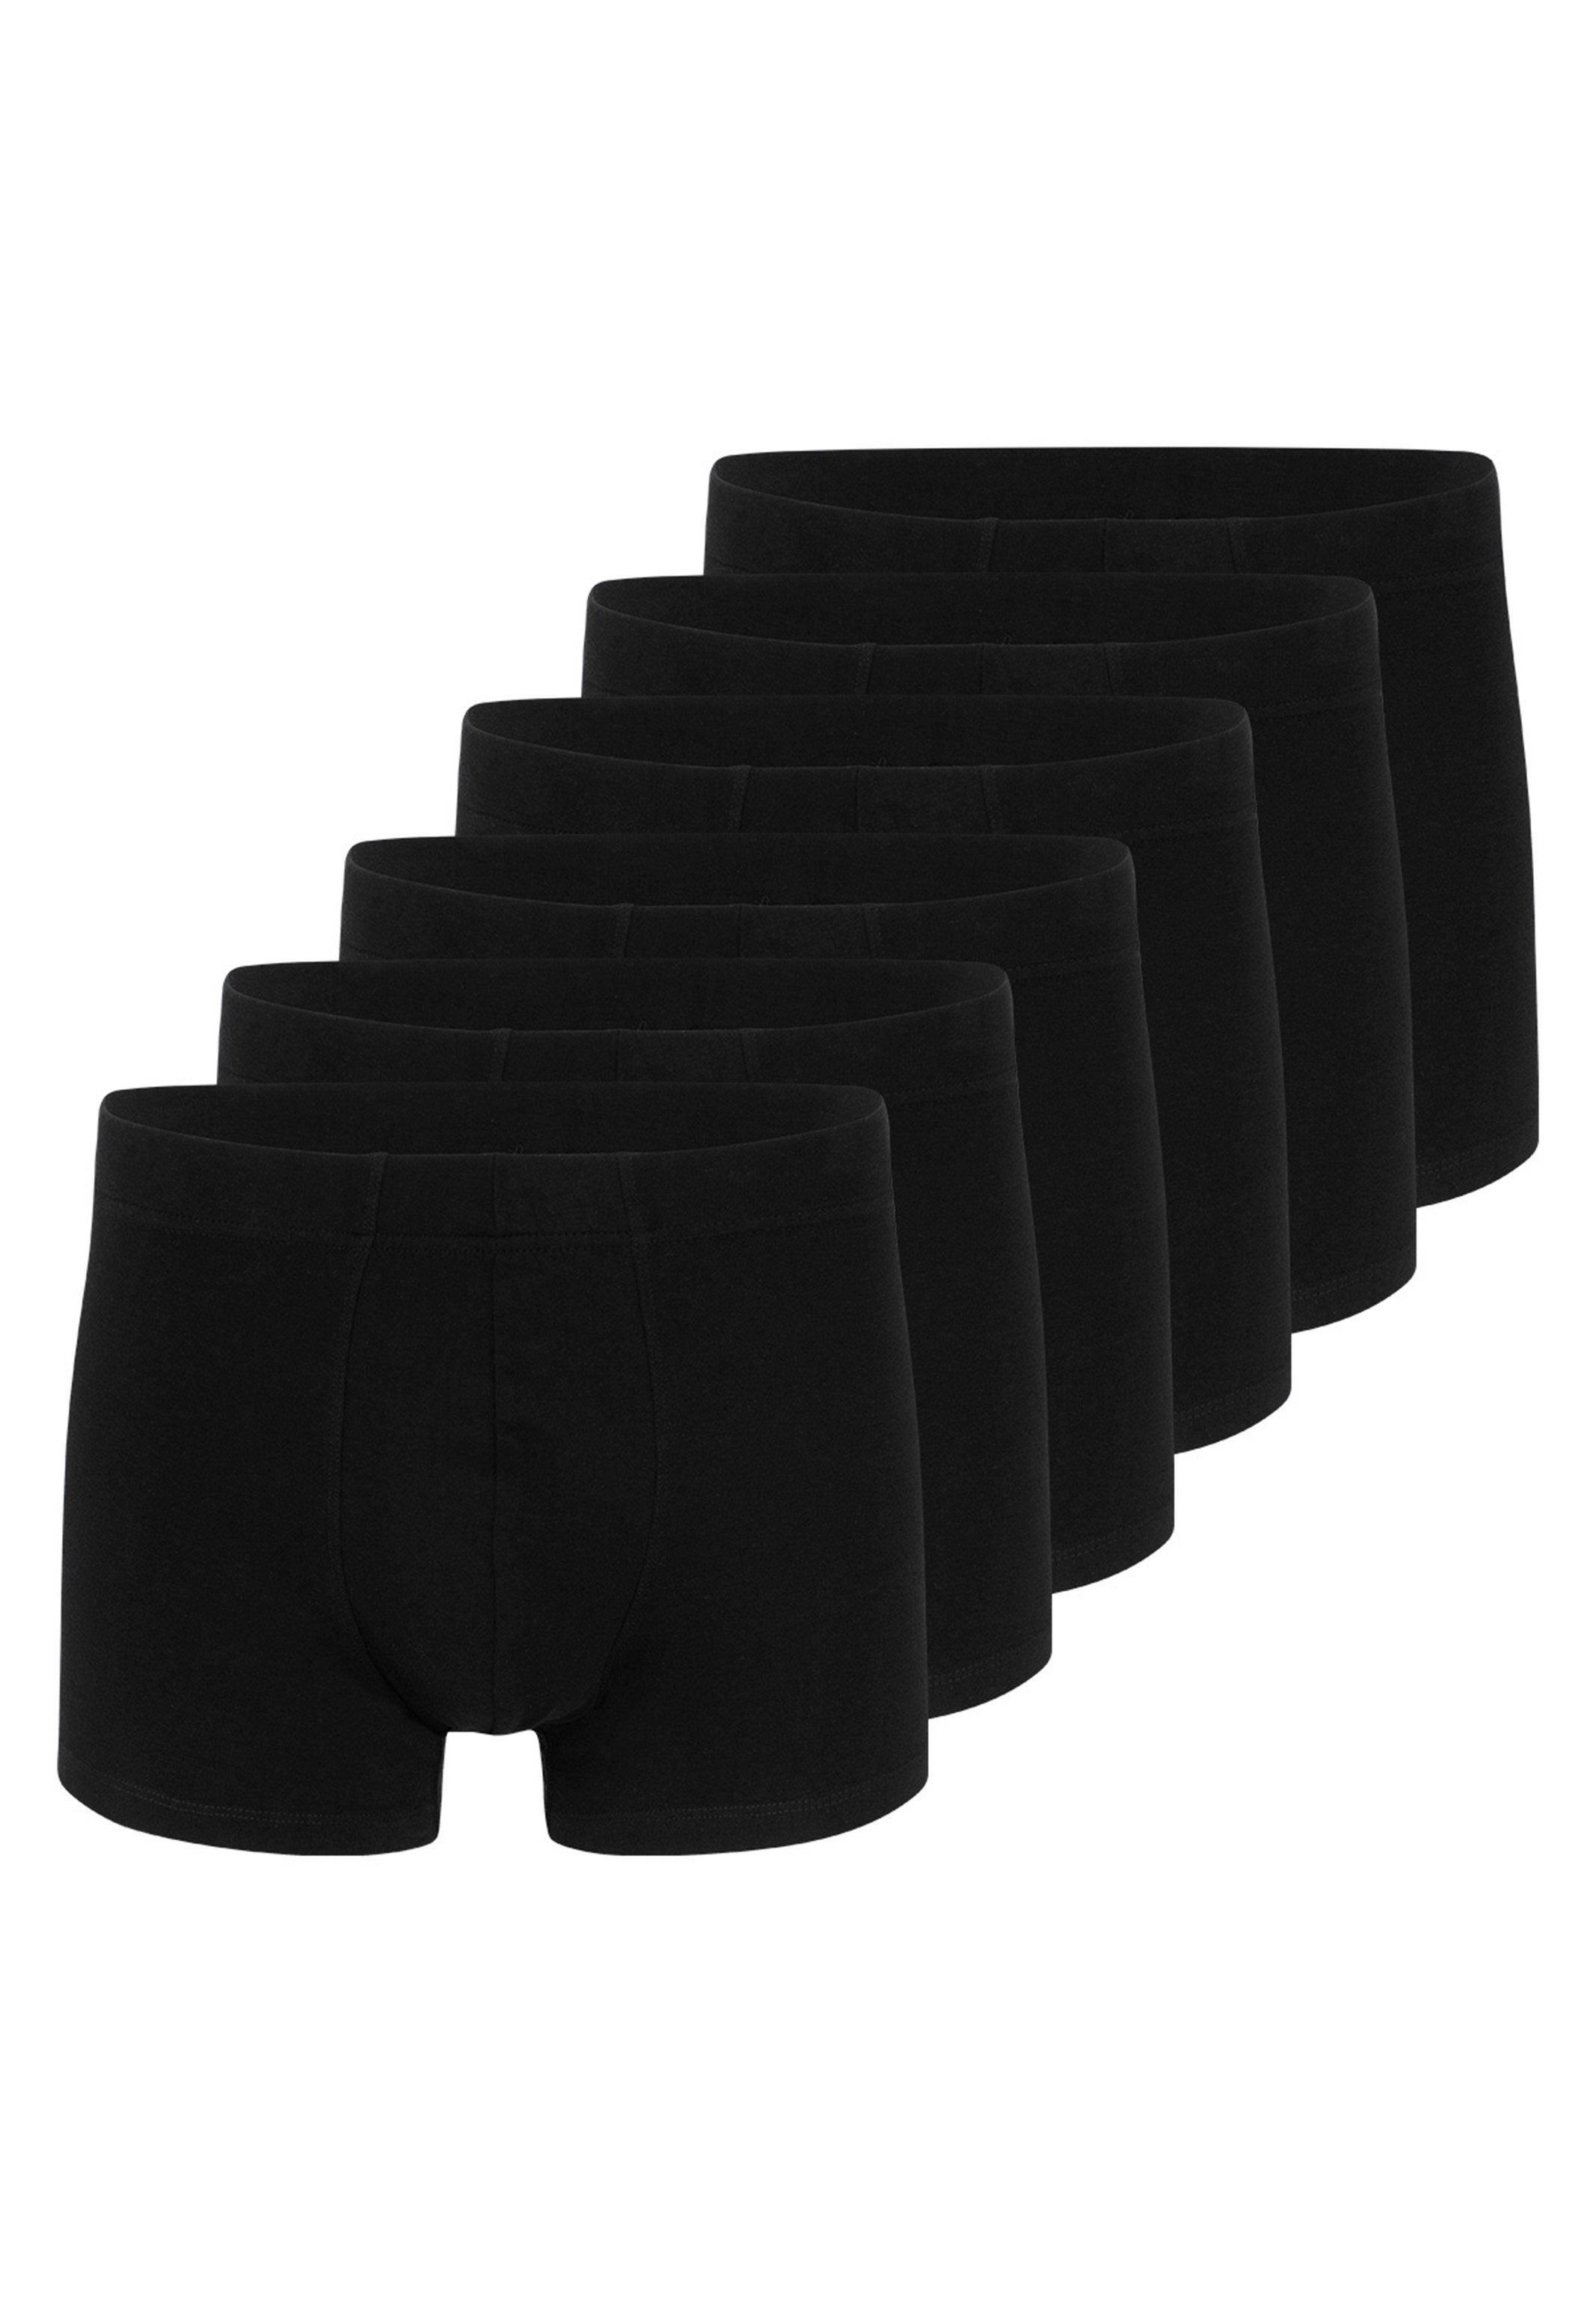 Almonu Retro Boxer 6er Pack Organic Cotton (Spar-Set, 6-St) Retro Short / Pant - Baumwolle - Ohne Eingriff - Atmungsaktiv Schwarz